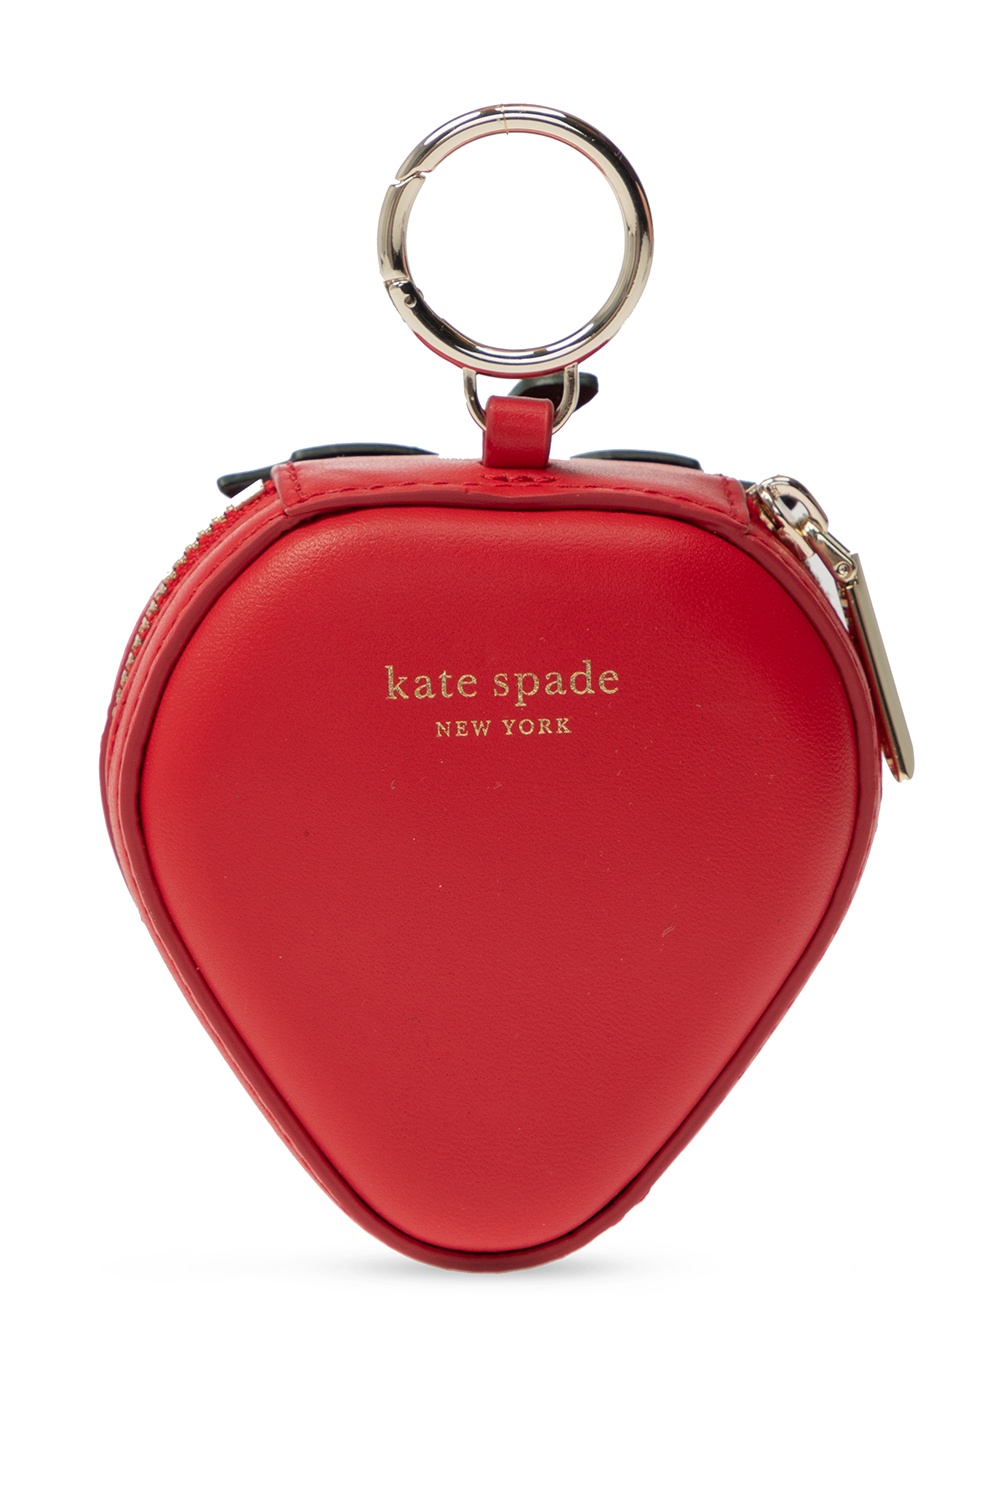 kate spade, Accessories, Kate Spade Keychain Wallet